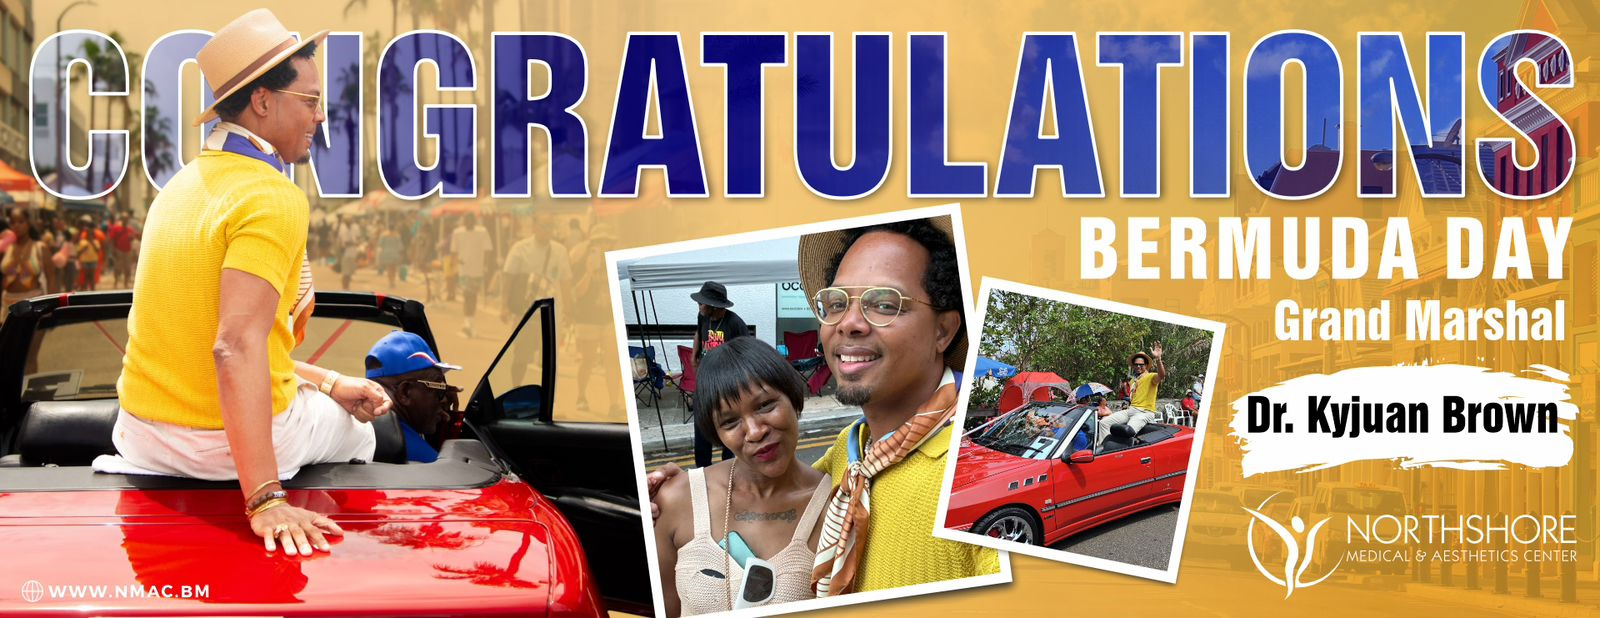 Congratulations - Bermuda Day - Grand Marshal Dr. Kyjuan Brown